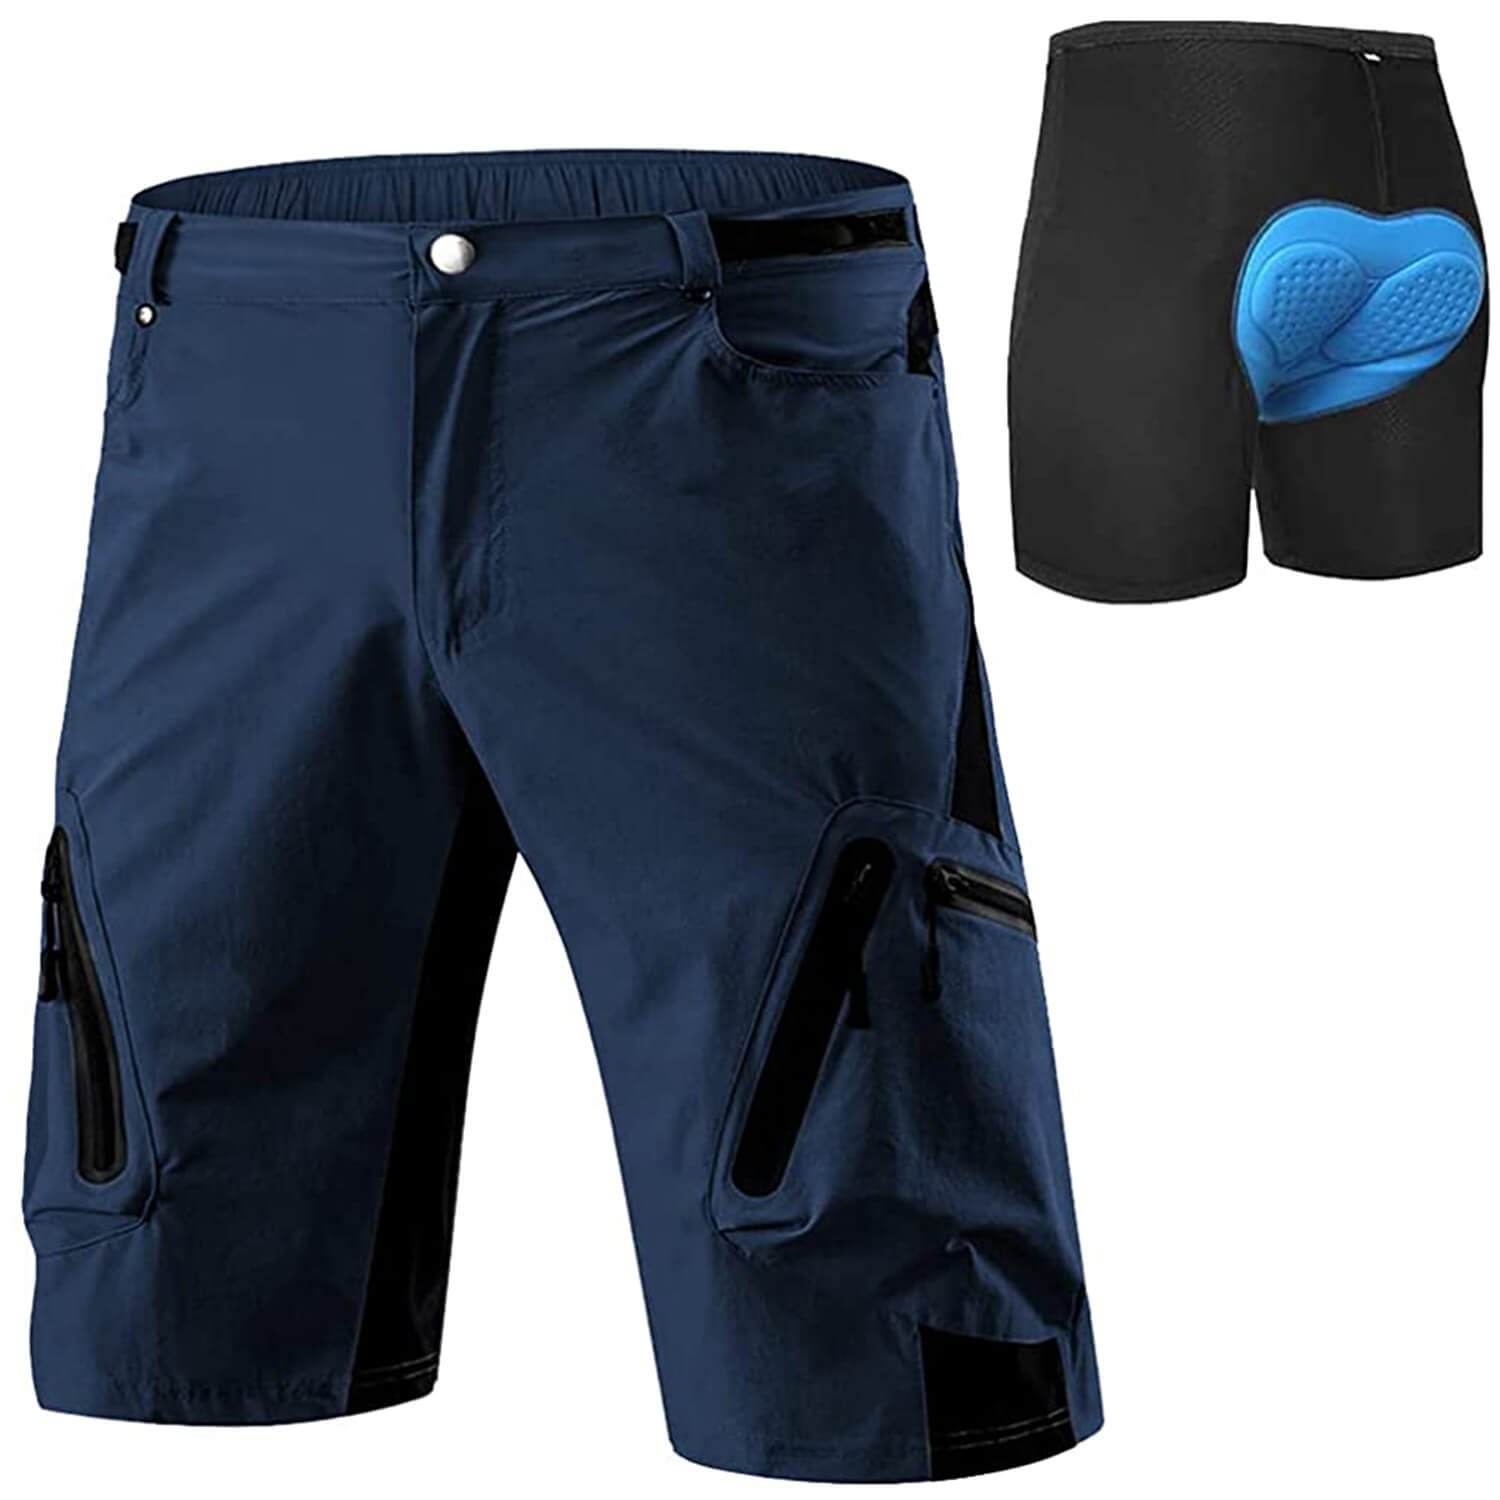 Men's Comfort mtb Shorts With Liner